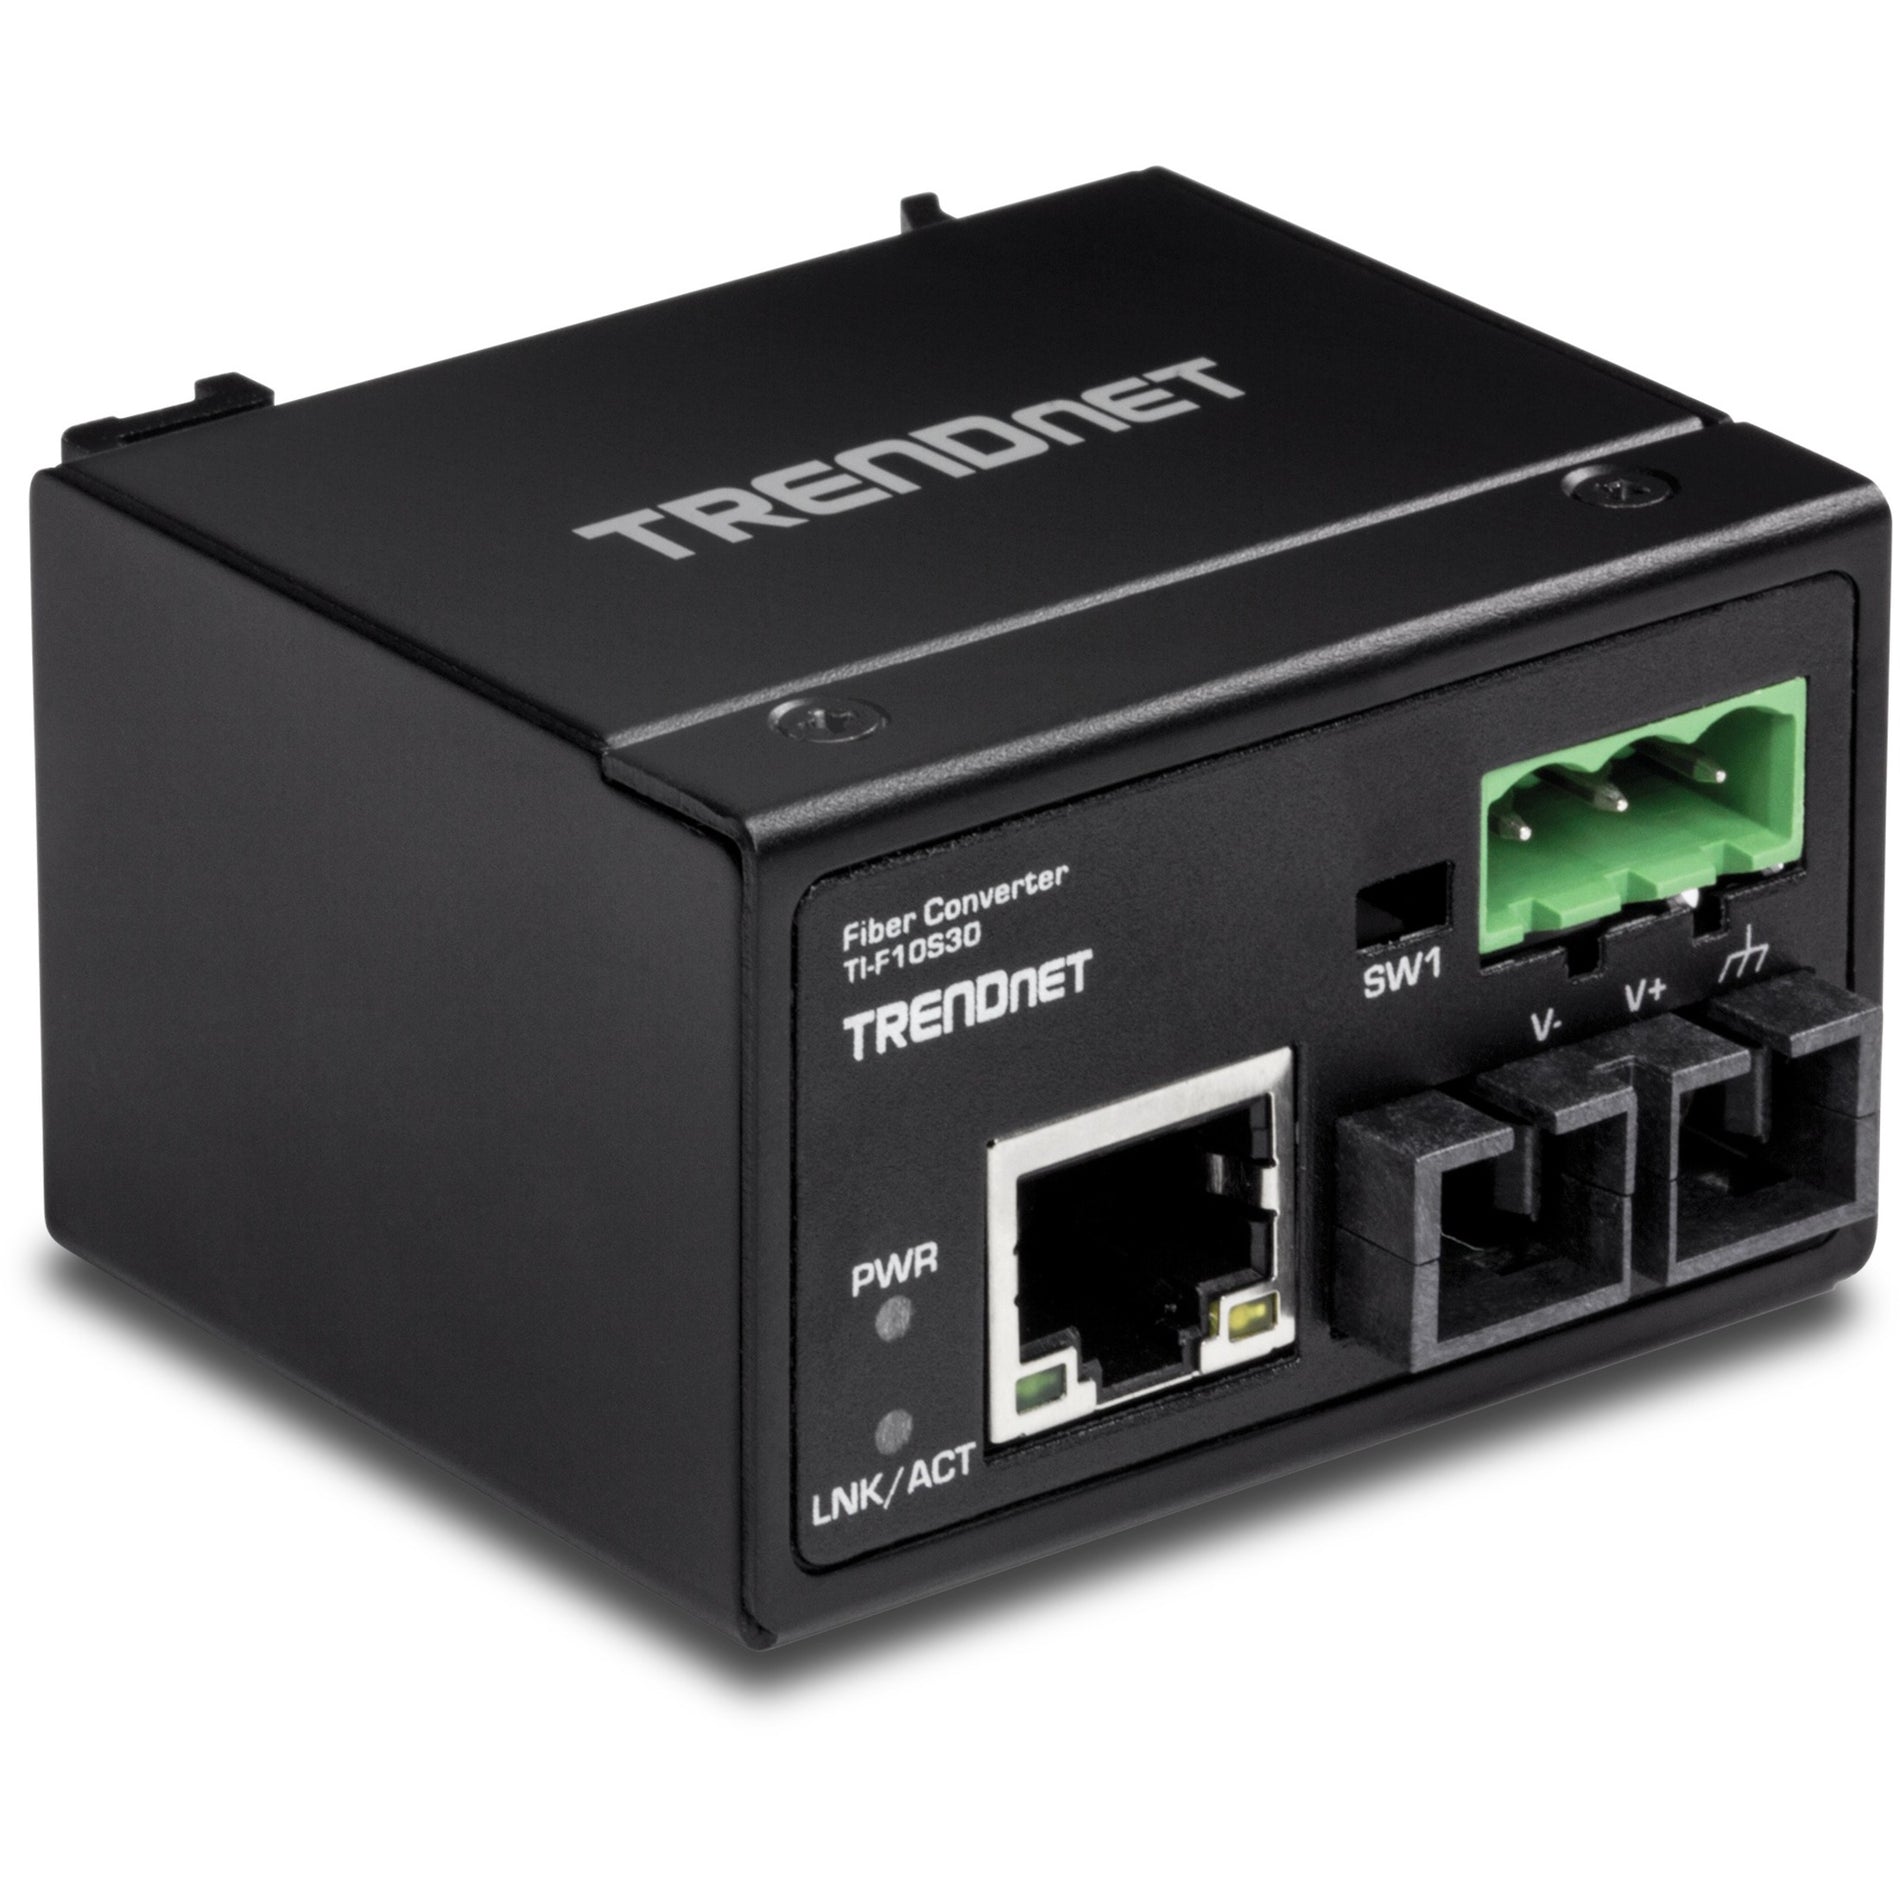 TRENDnet TI-F10S30 Hardened Industrial 100Base-FX Single-Mode SC Fiber Converter, 30 km, IP40 Rated Housing